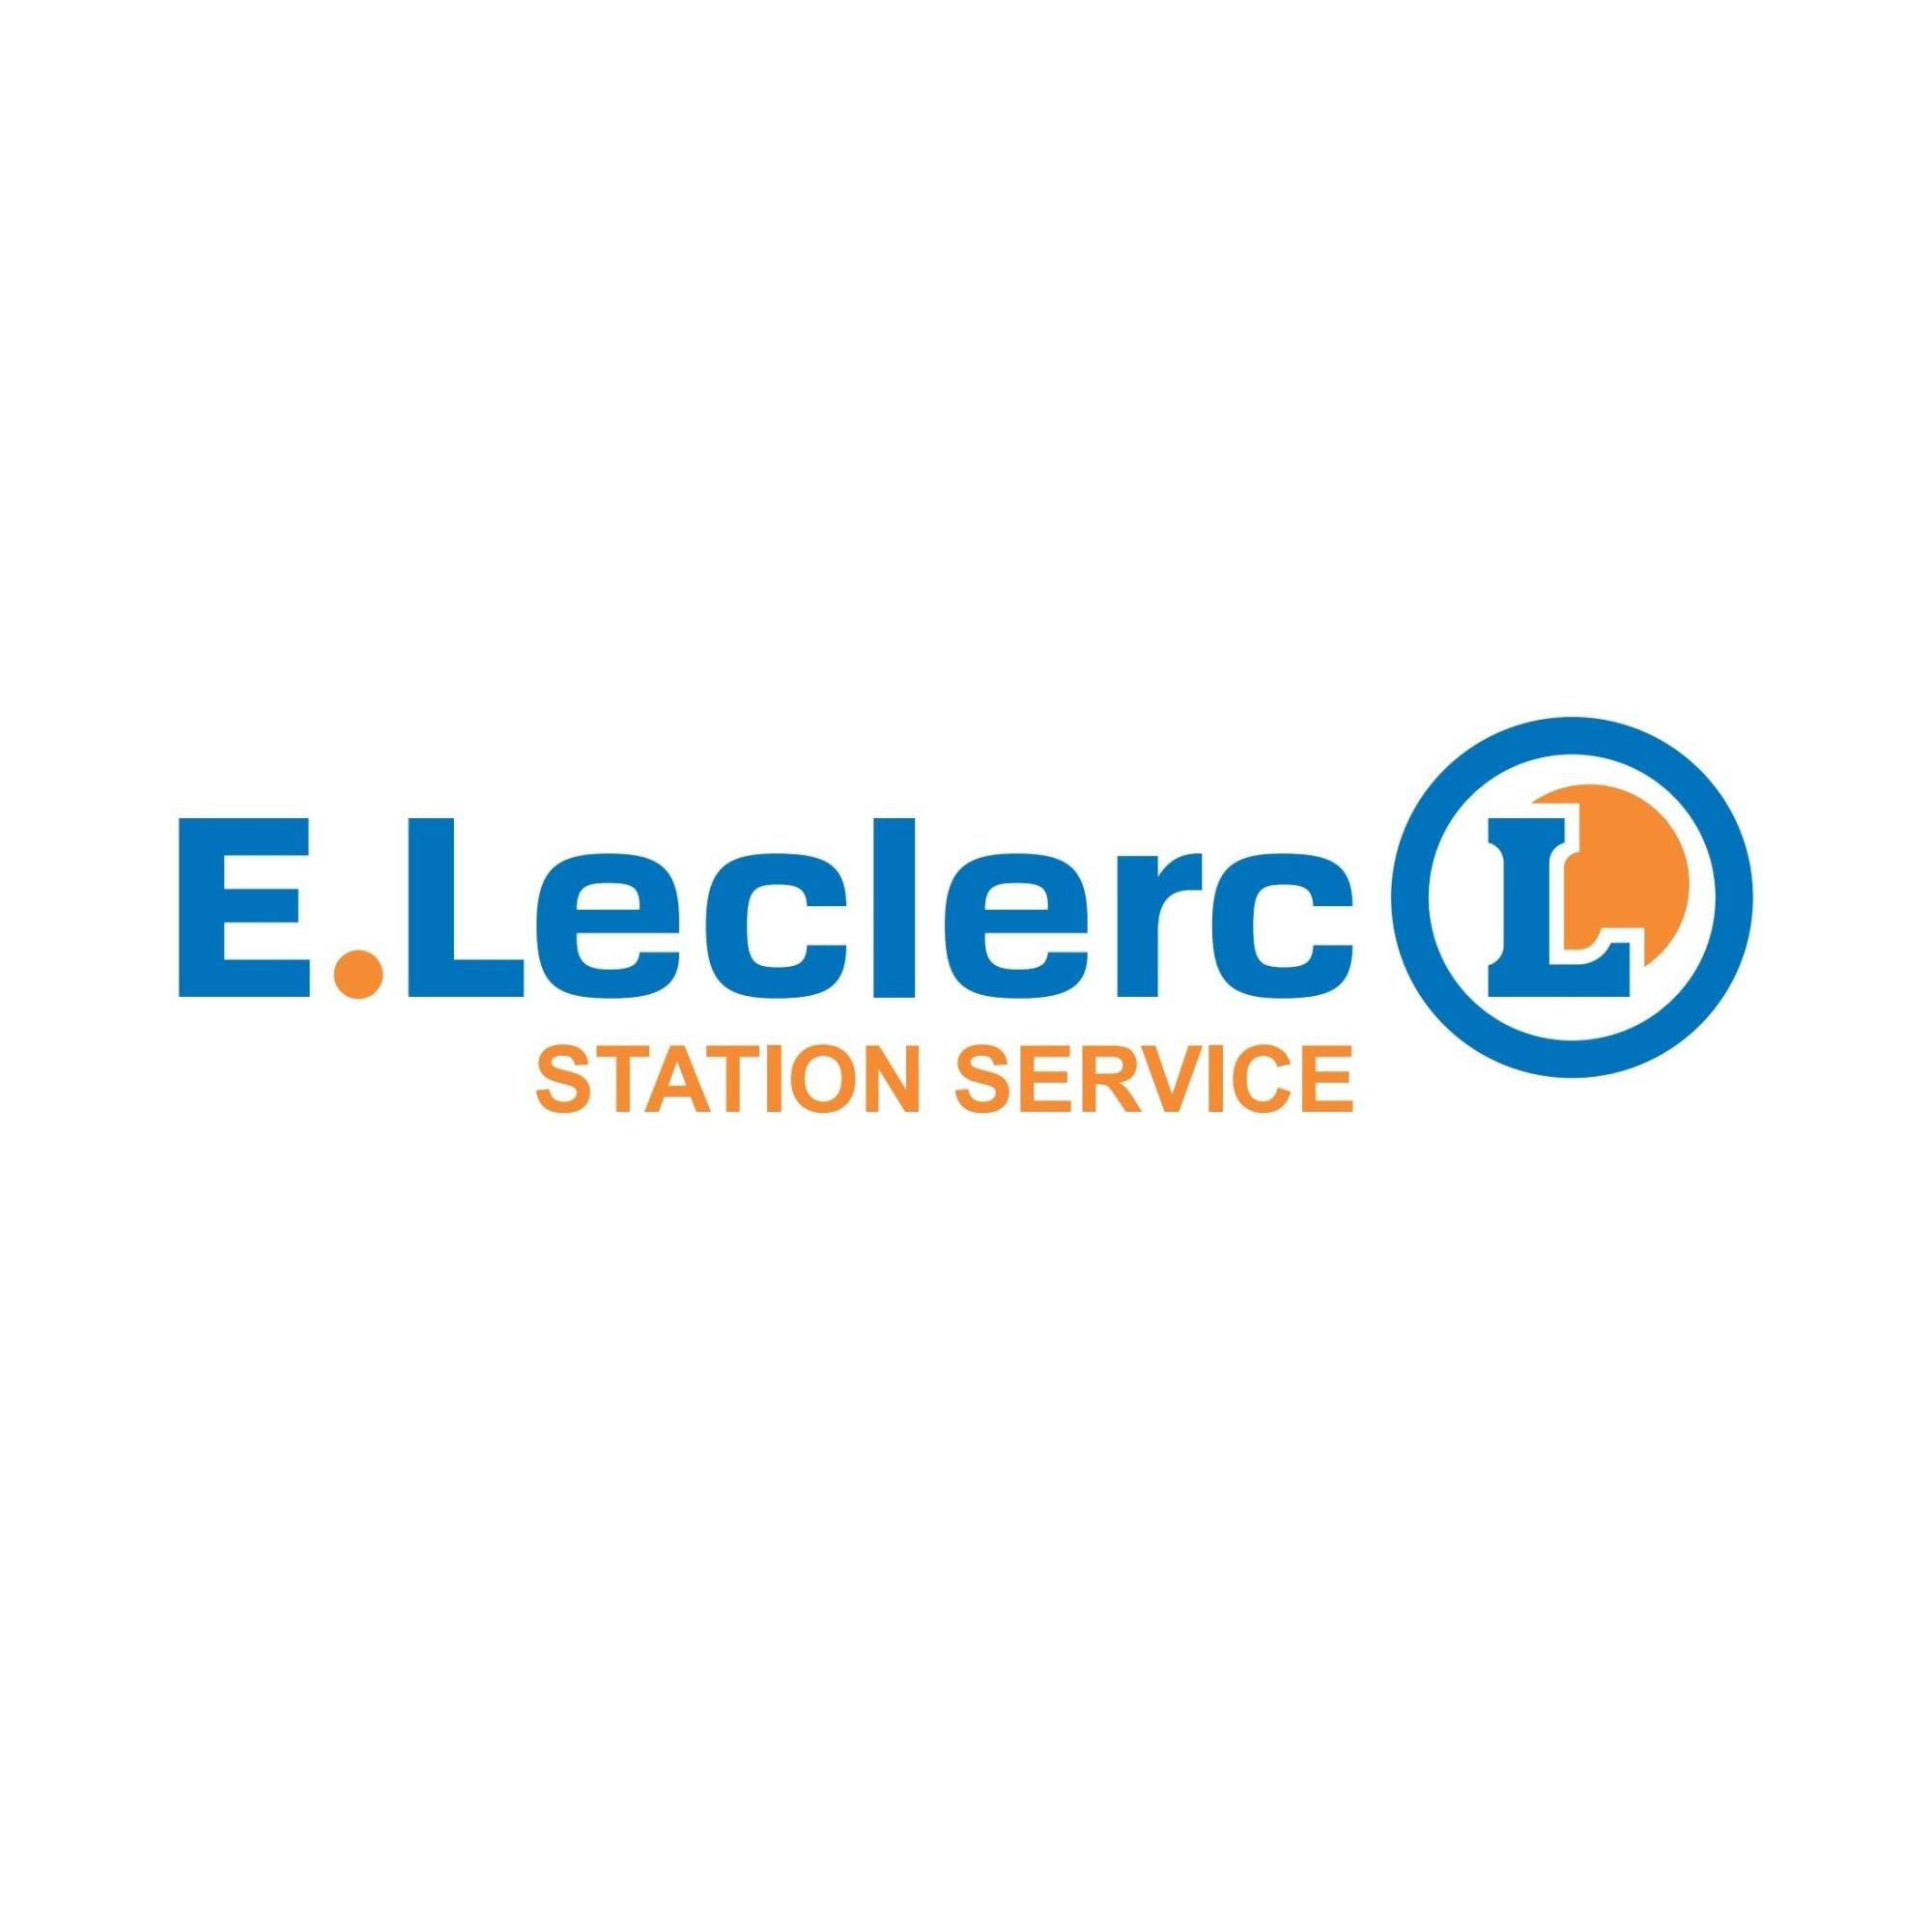 E.leclerc Station Service Saintes